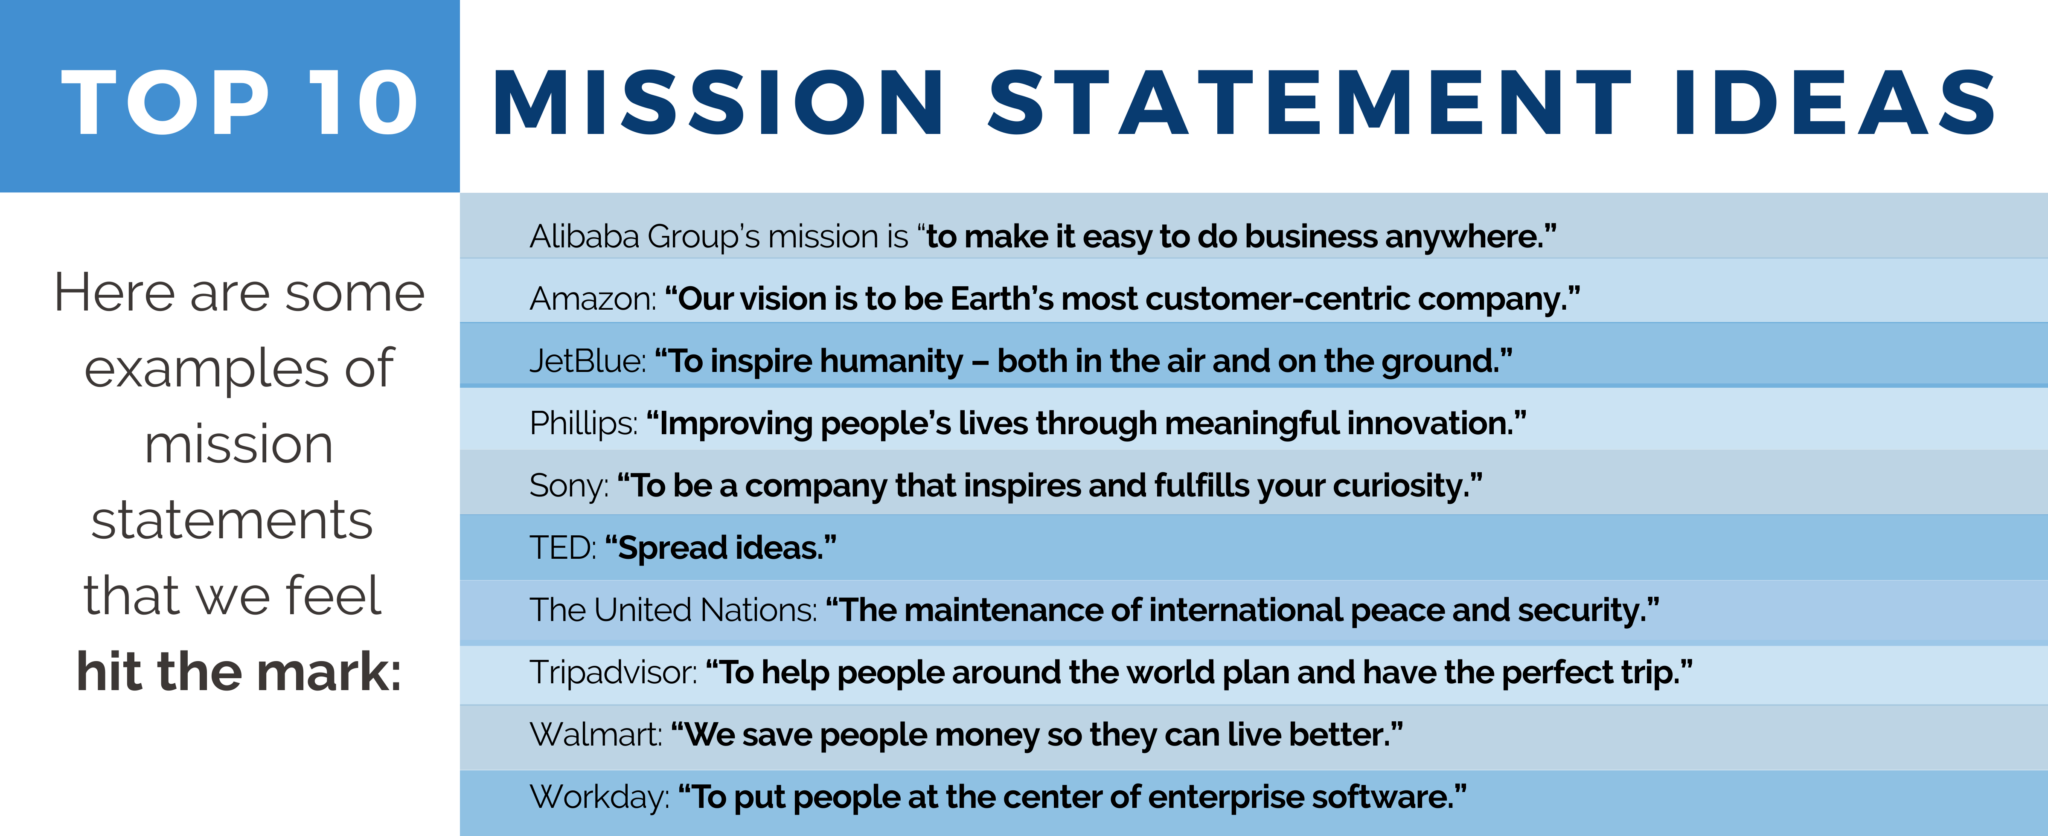 Top 10 Mission Statement Ideas